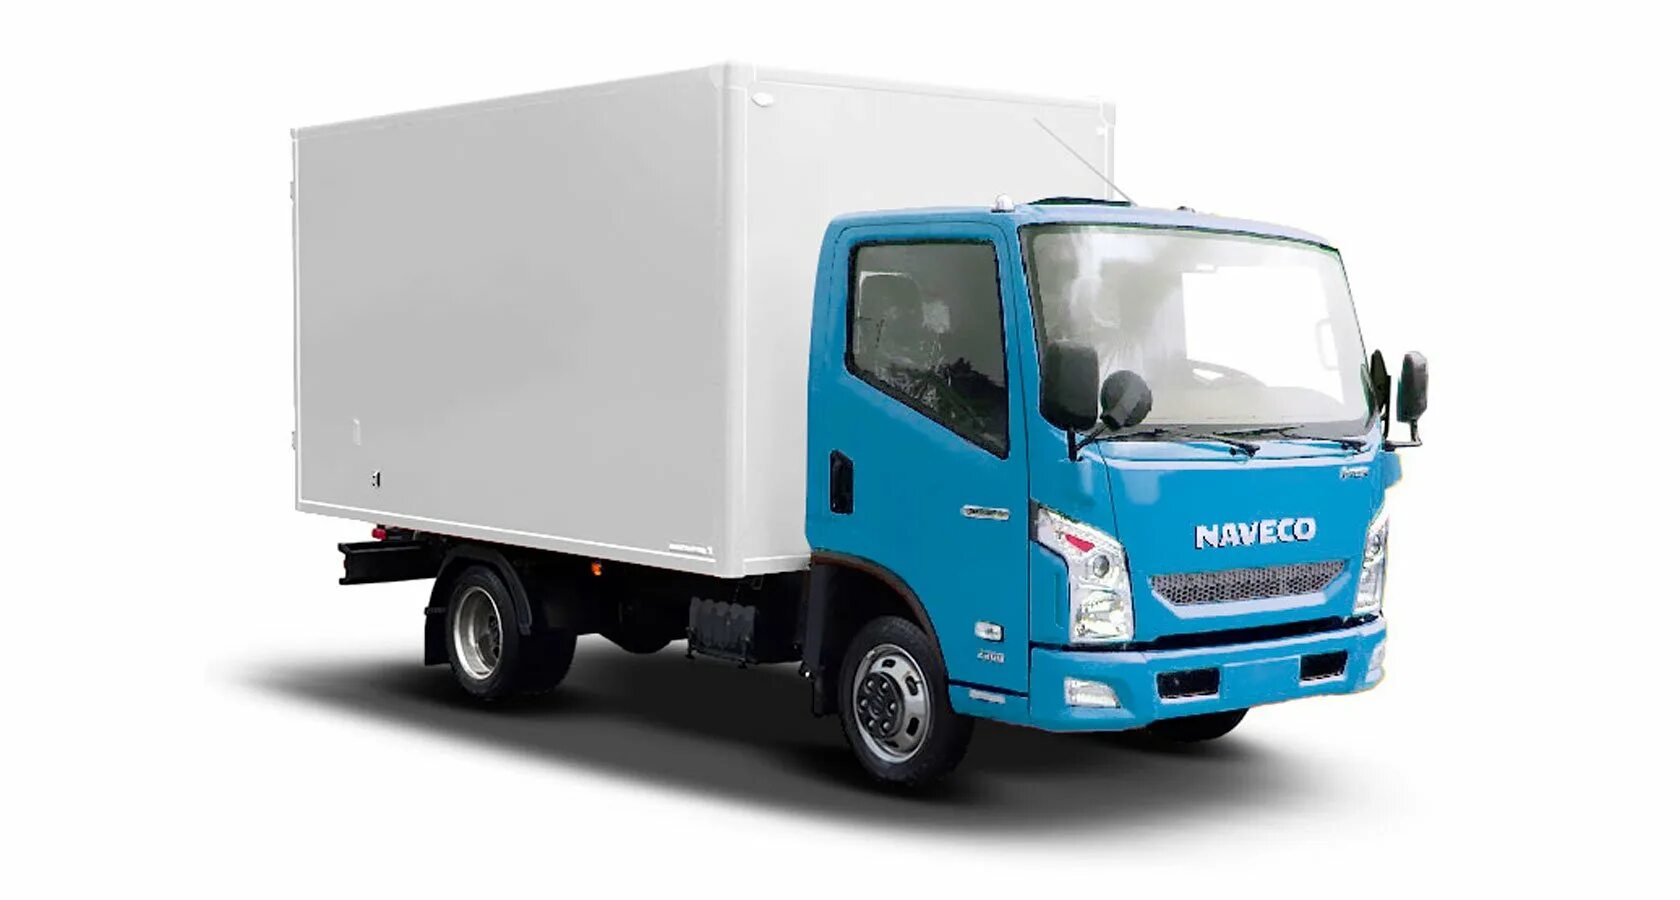 Категория б до тонн. Грузовик Naveco c300. Hyundai 72, фургон 3,5т. Фотон бортовой 5 тонн. Грузовик Навеко 3 тонн.